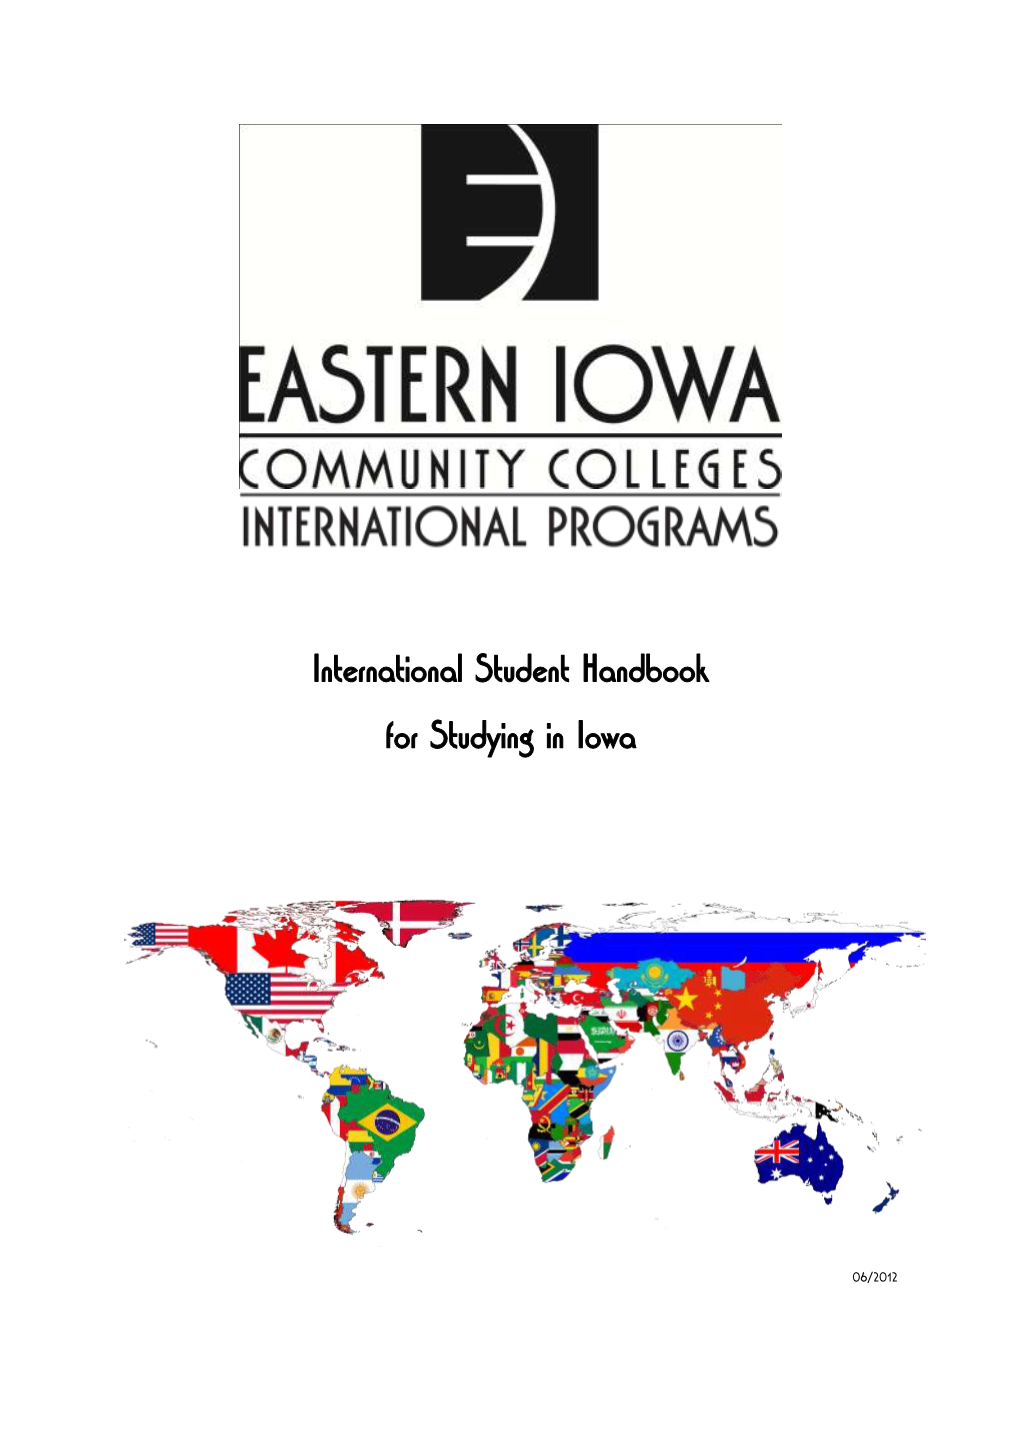 EICC International Student Handbook